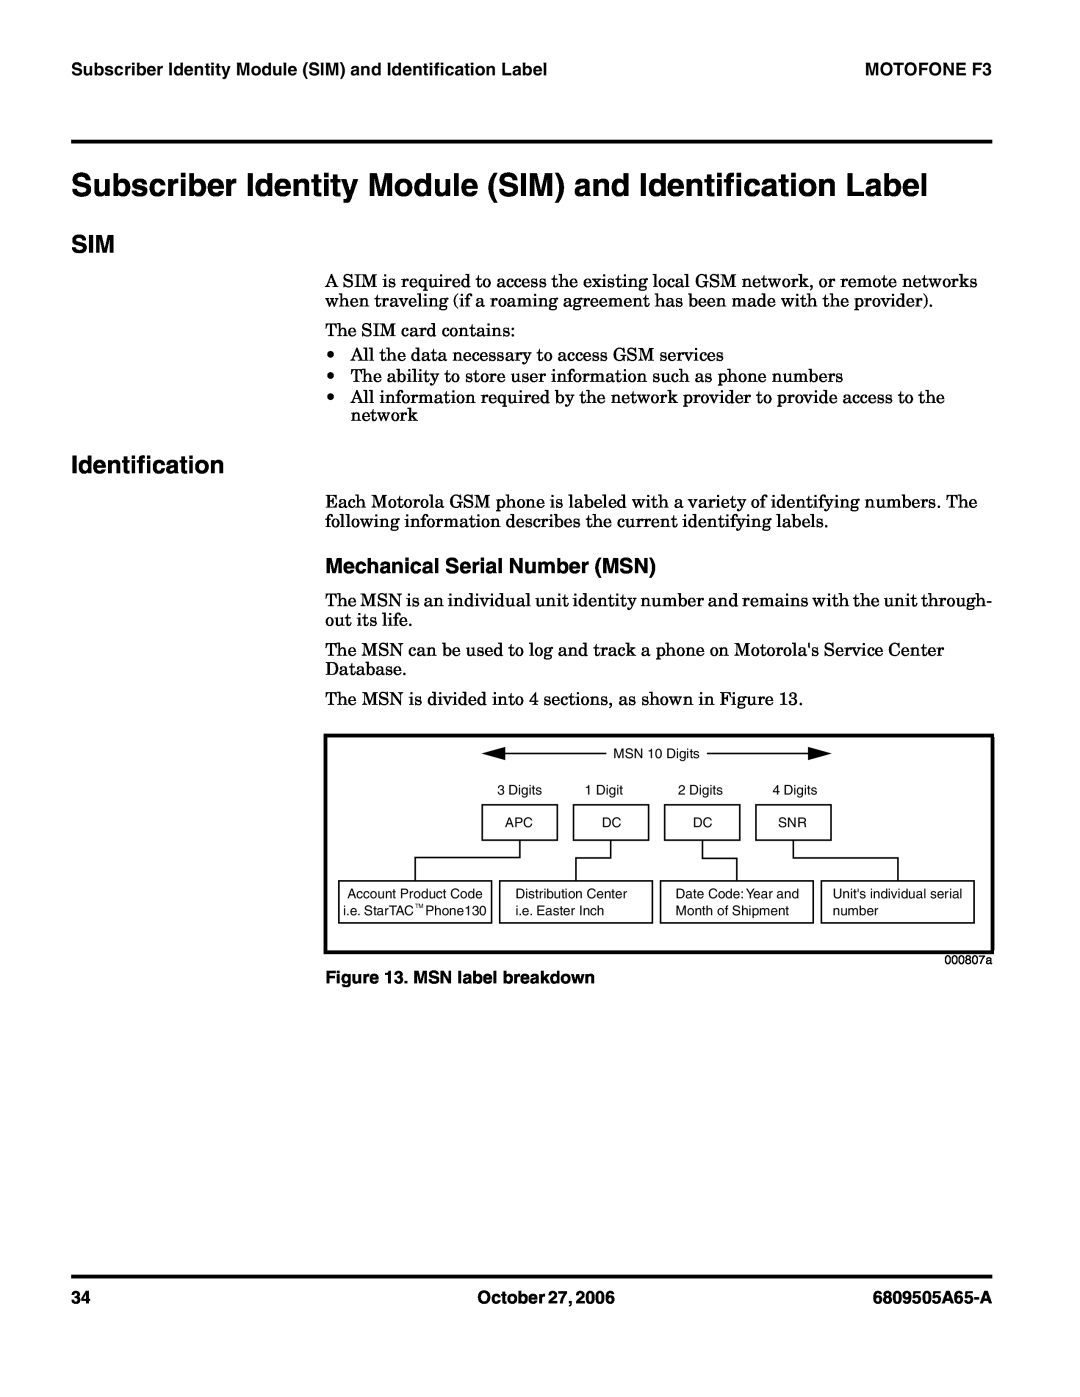 Motorola F3 Subscriber Identity Module SIM and Identification Label, Mechanical Serial Number MSN, MSN label breakdown 